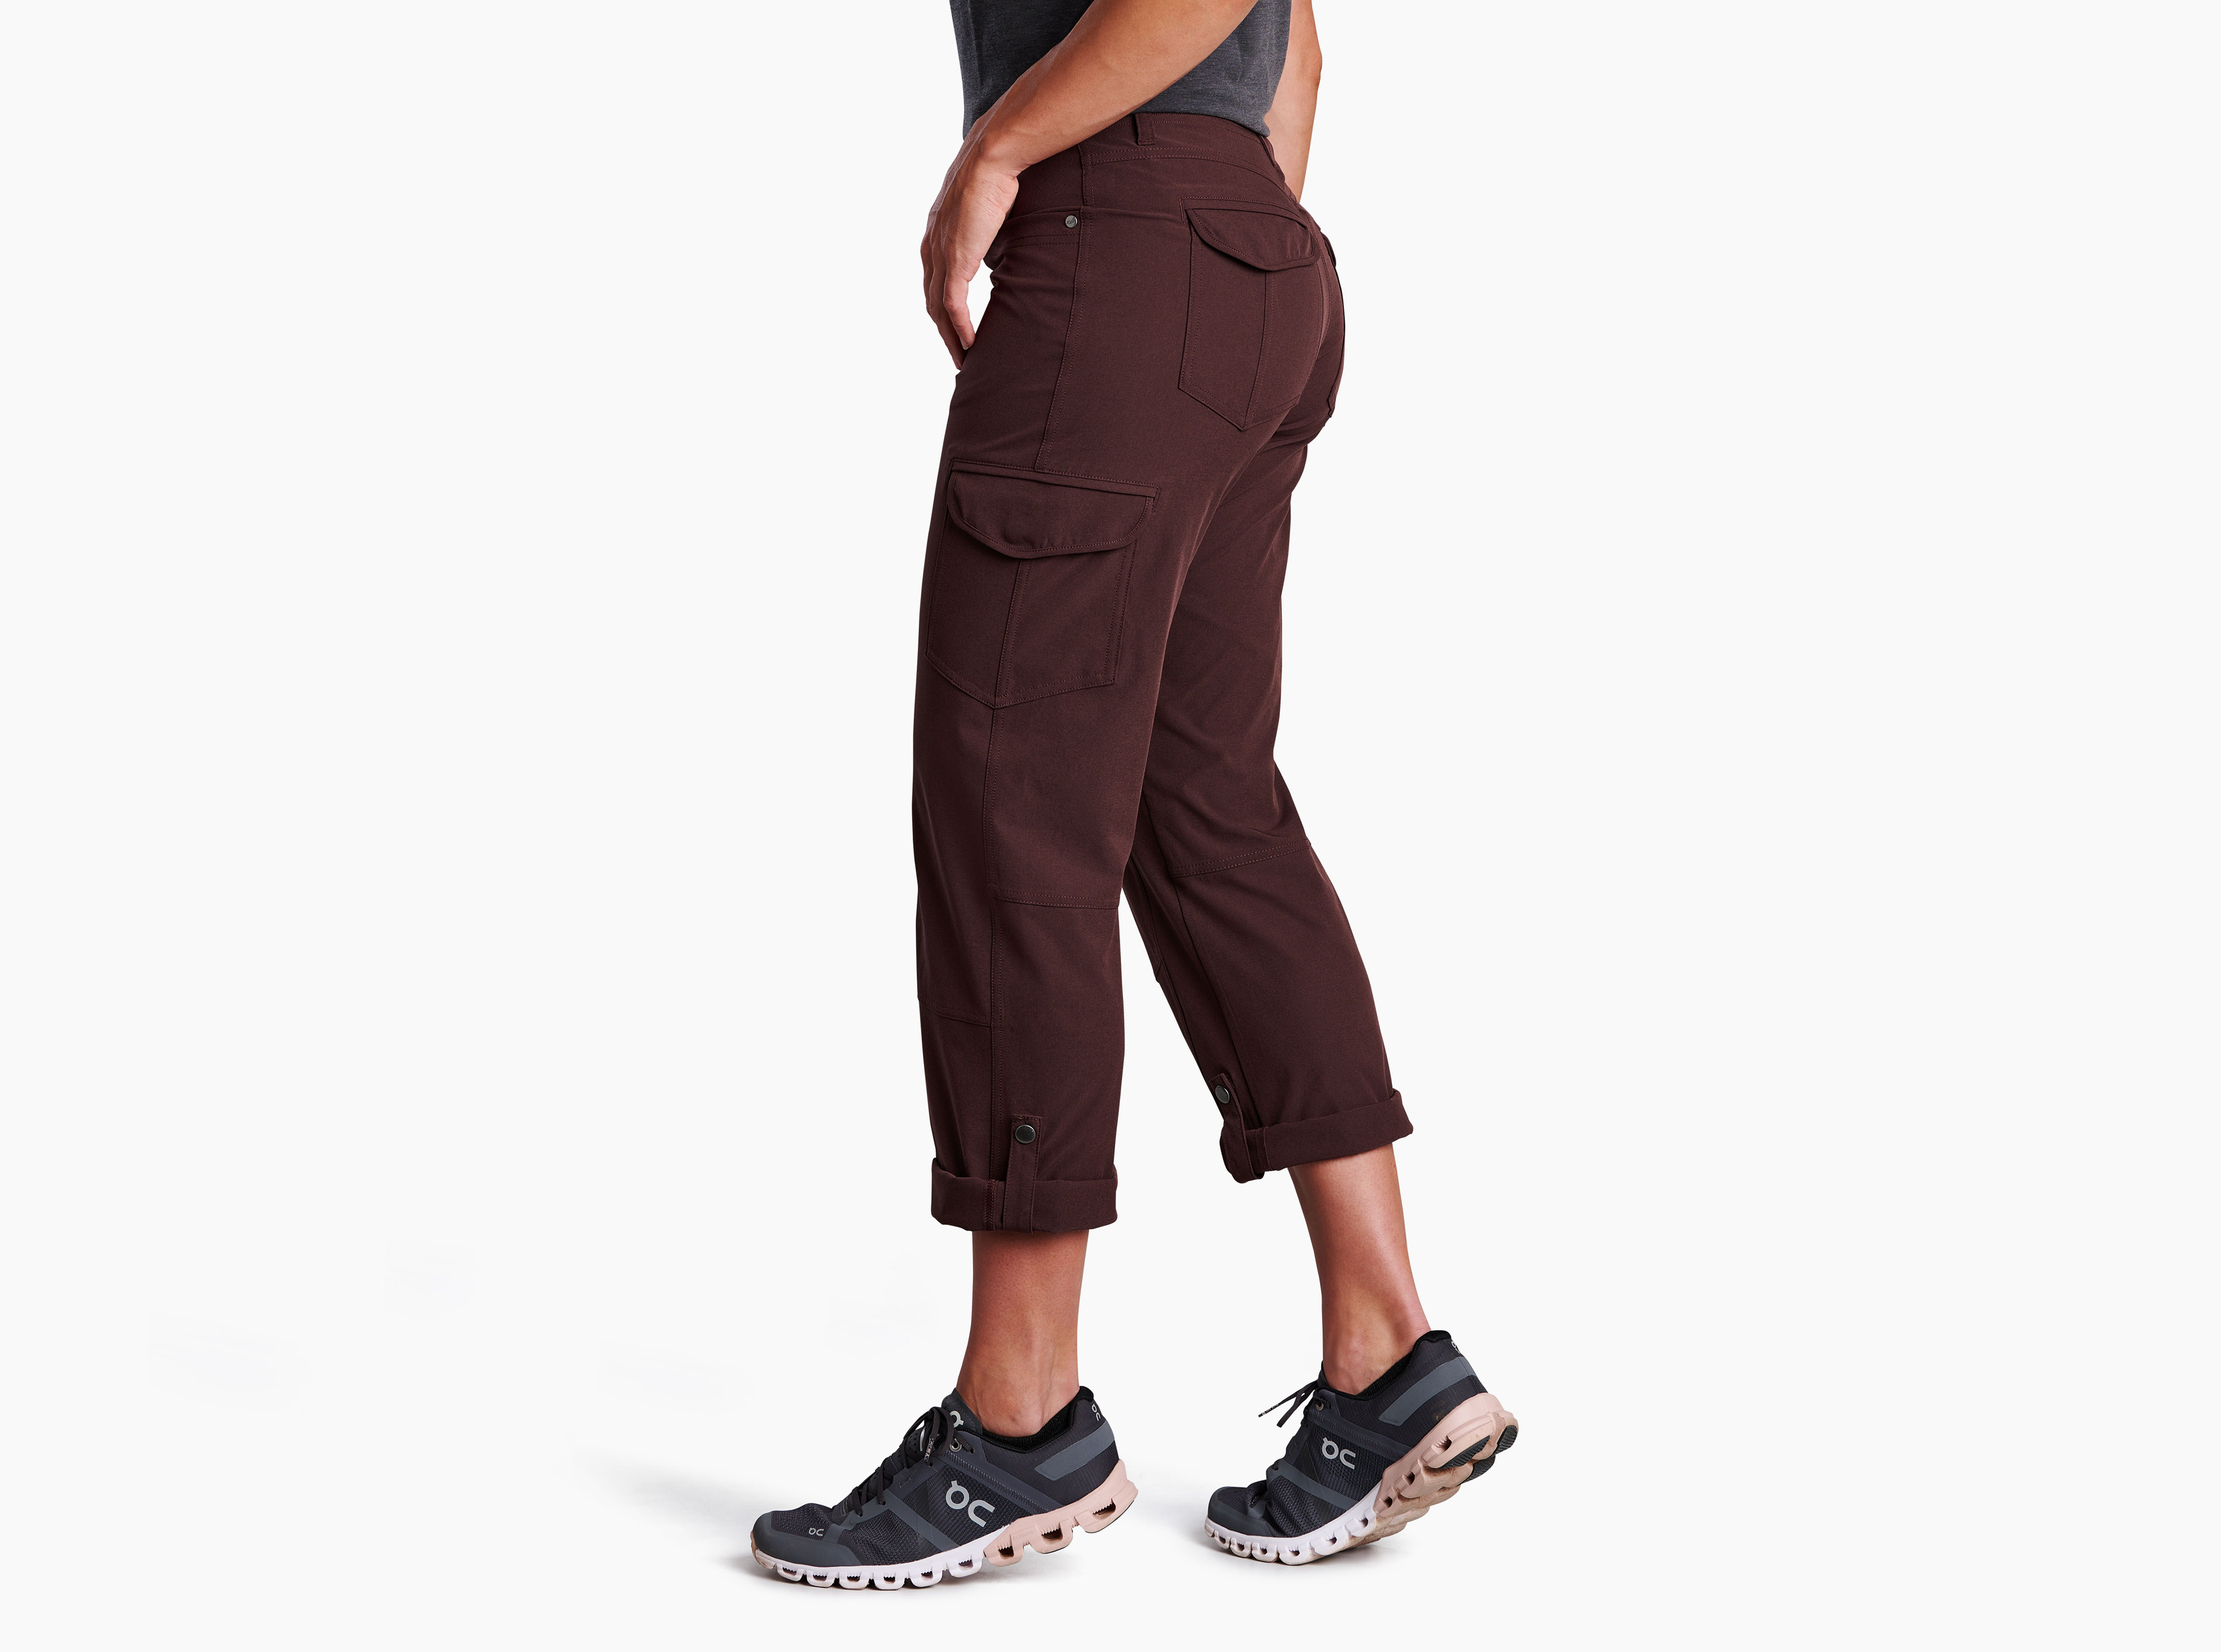 Freeflex™ Roll-Up Pant in Women's Pants, KÜHL Clothing